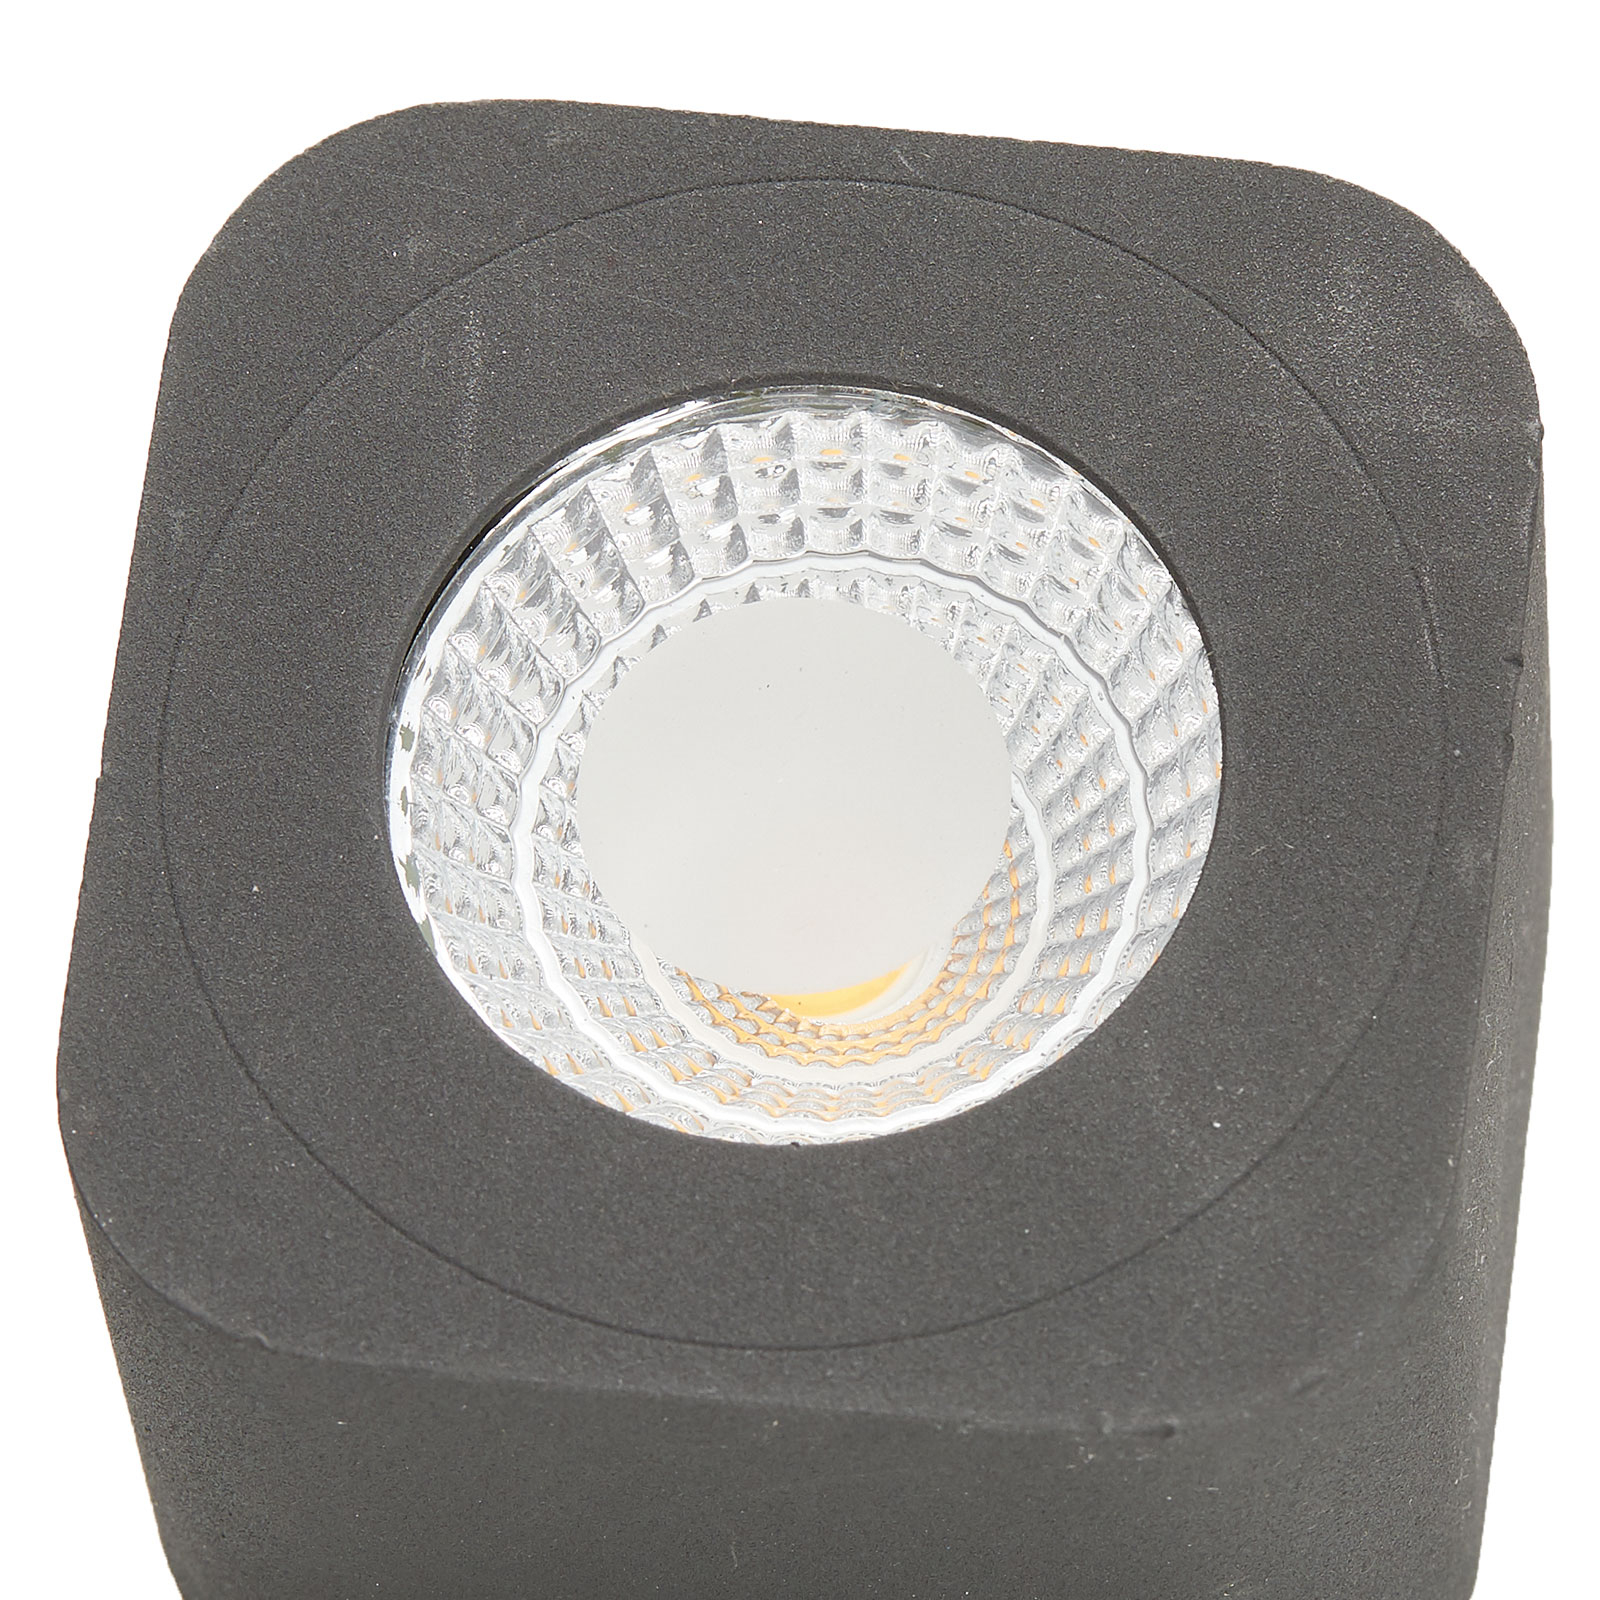 Angular LED downlight Palmi in anthracite